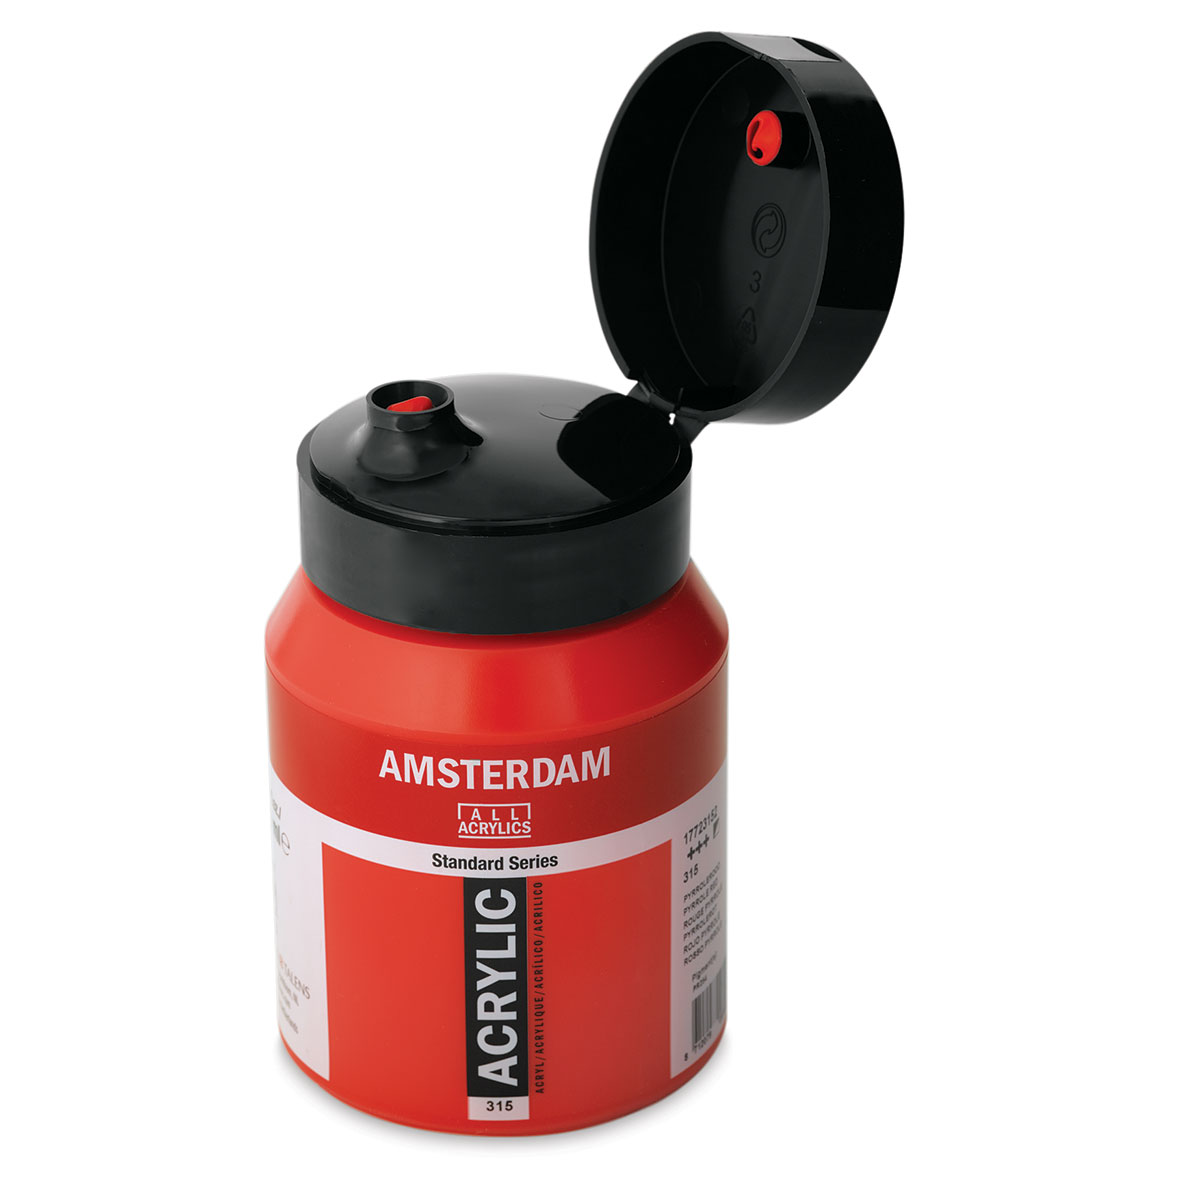 Amsterdam Standard Series Acrylic Paint - Pyrrole Red, 500 ml, Bottle